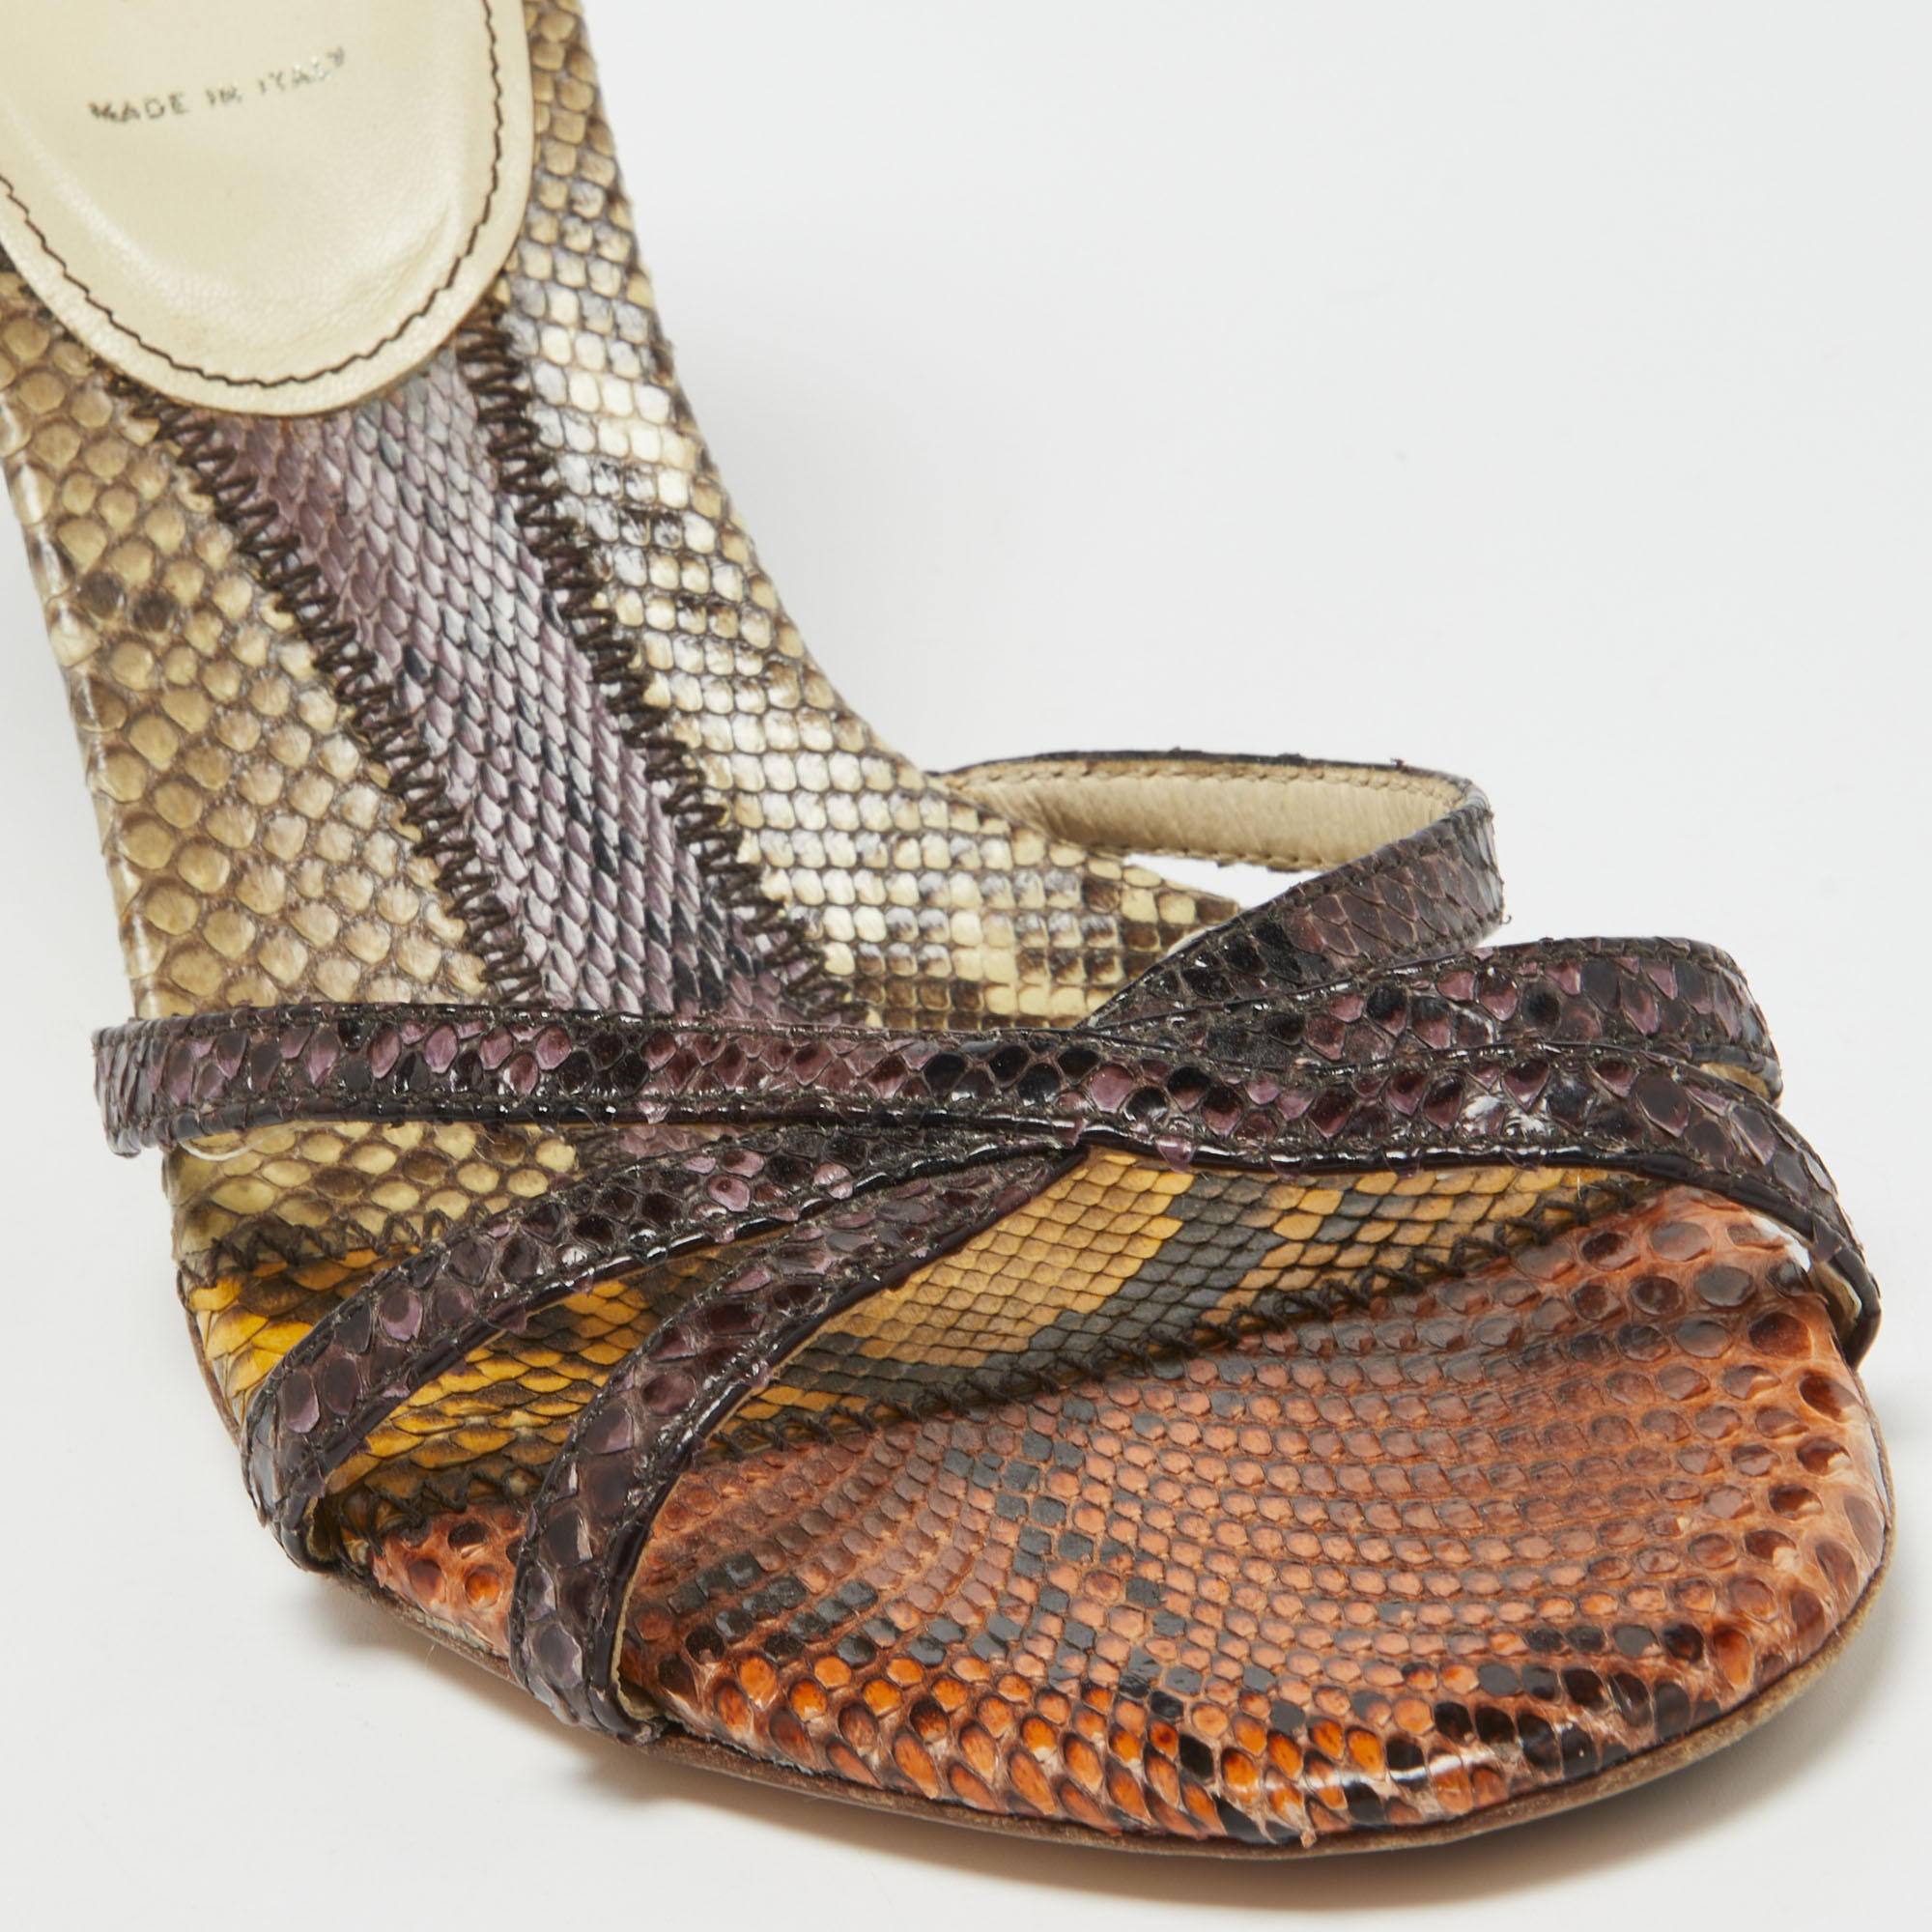 Prada Multicolor Snakeskin Ankle Strap Wedge Sandals Size 40